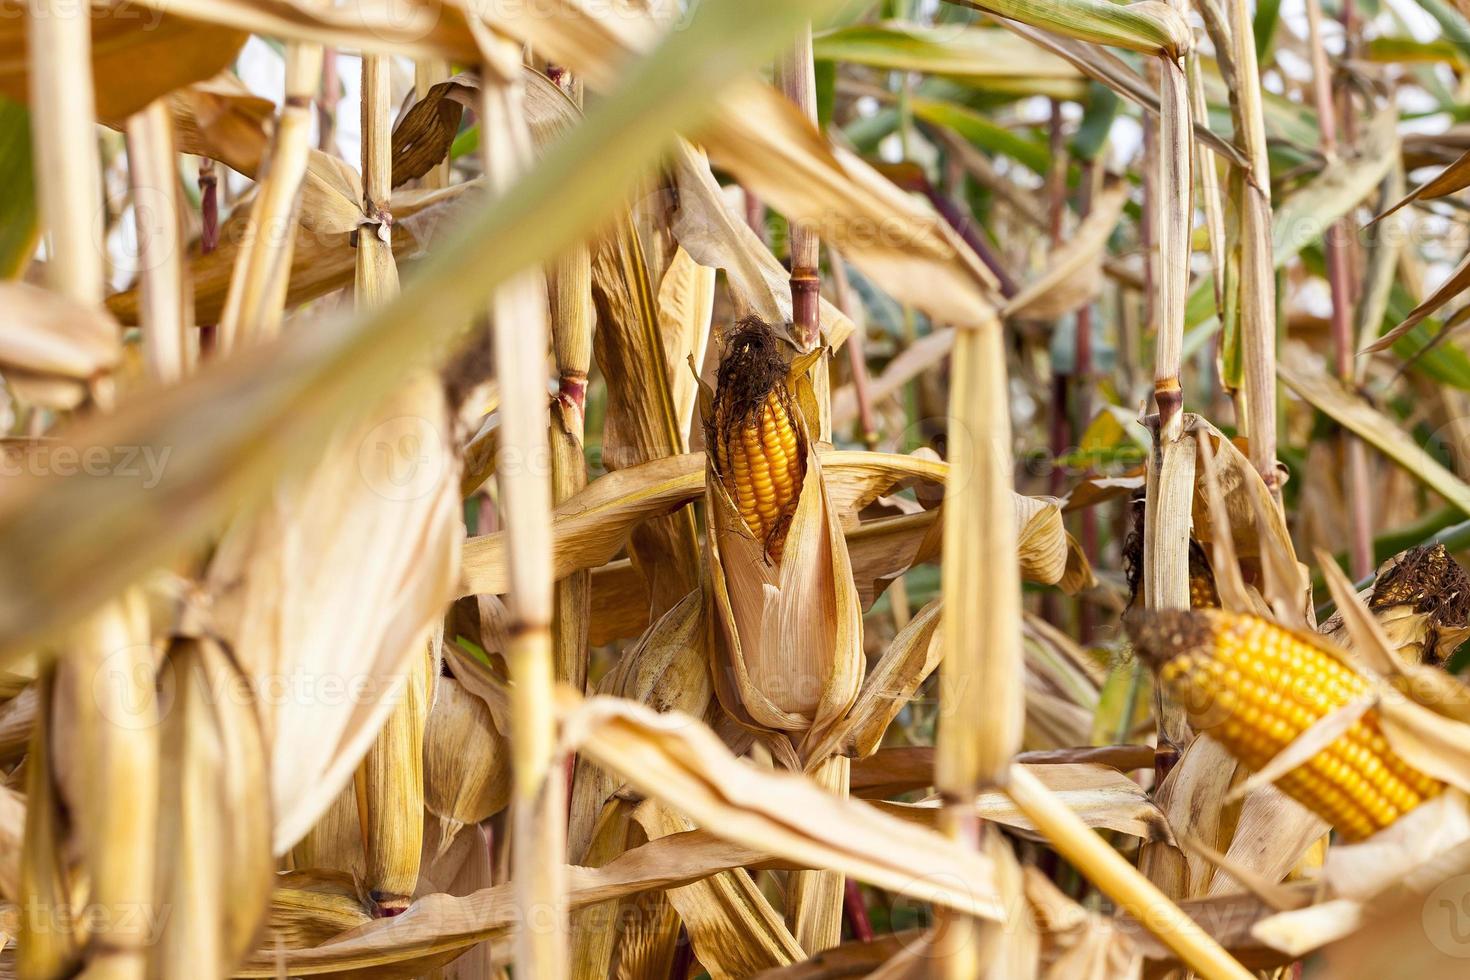 maíz en un campo agrícola foto